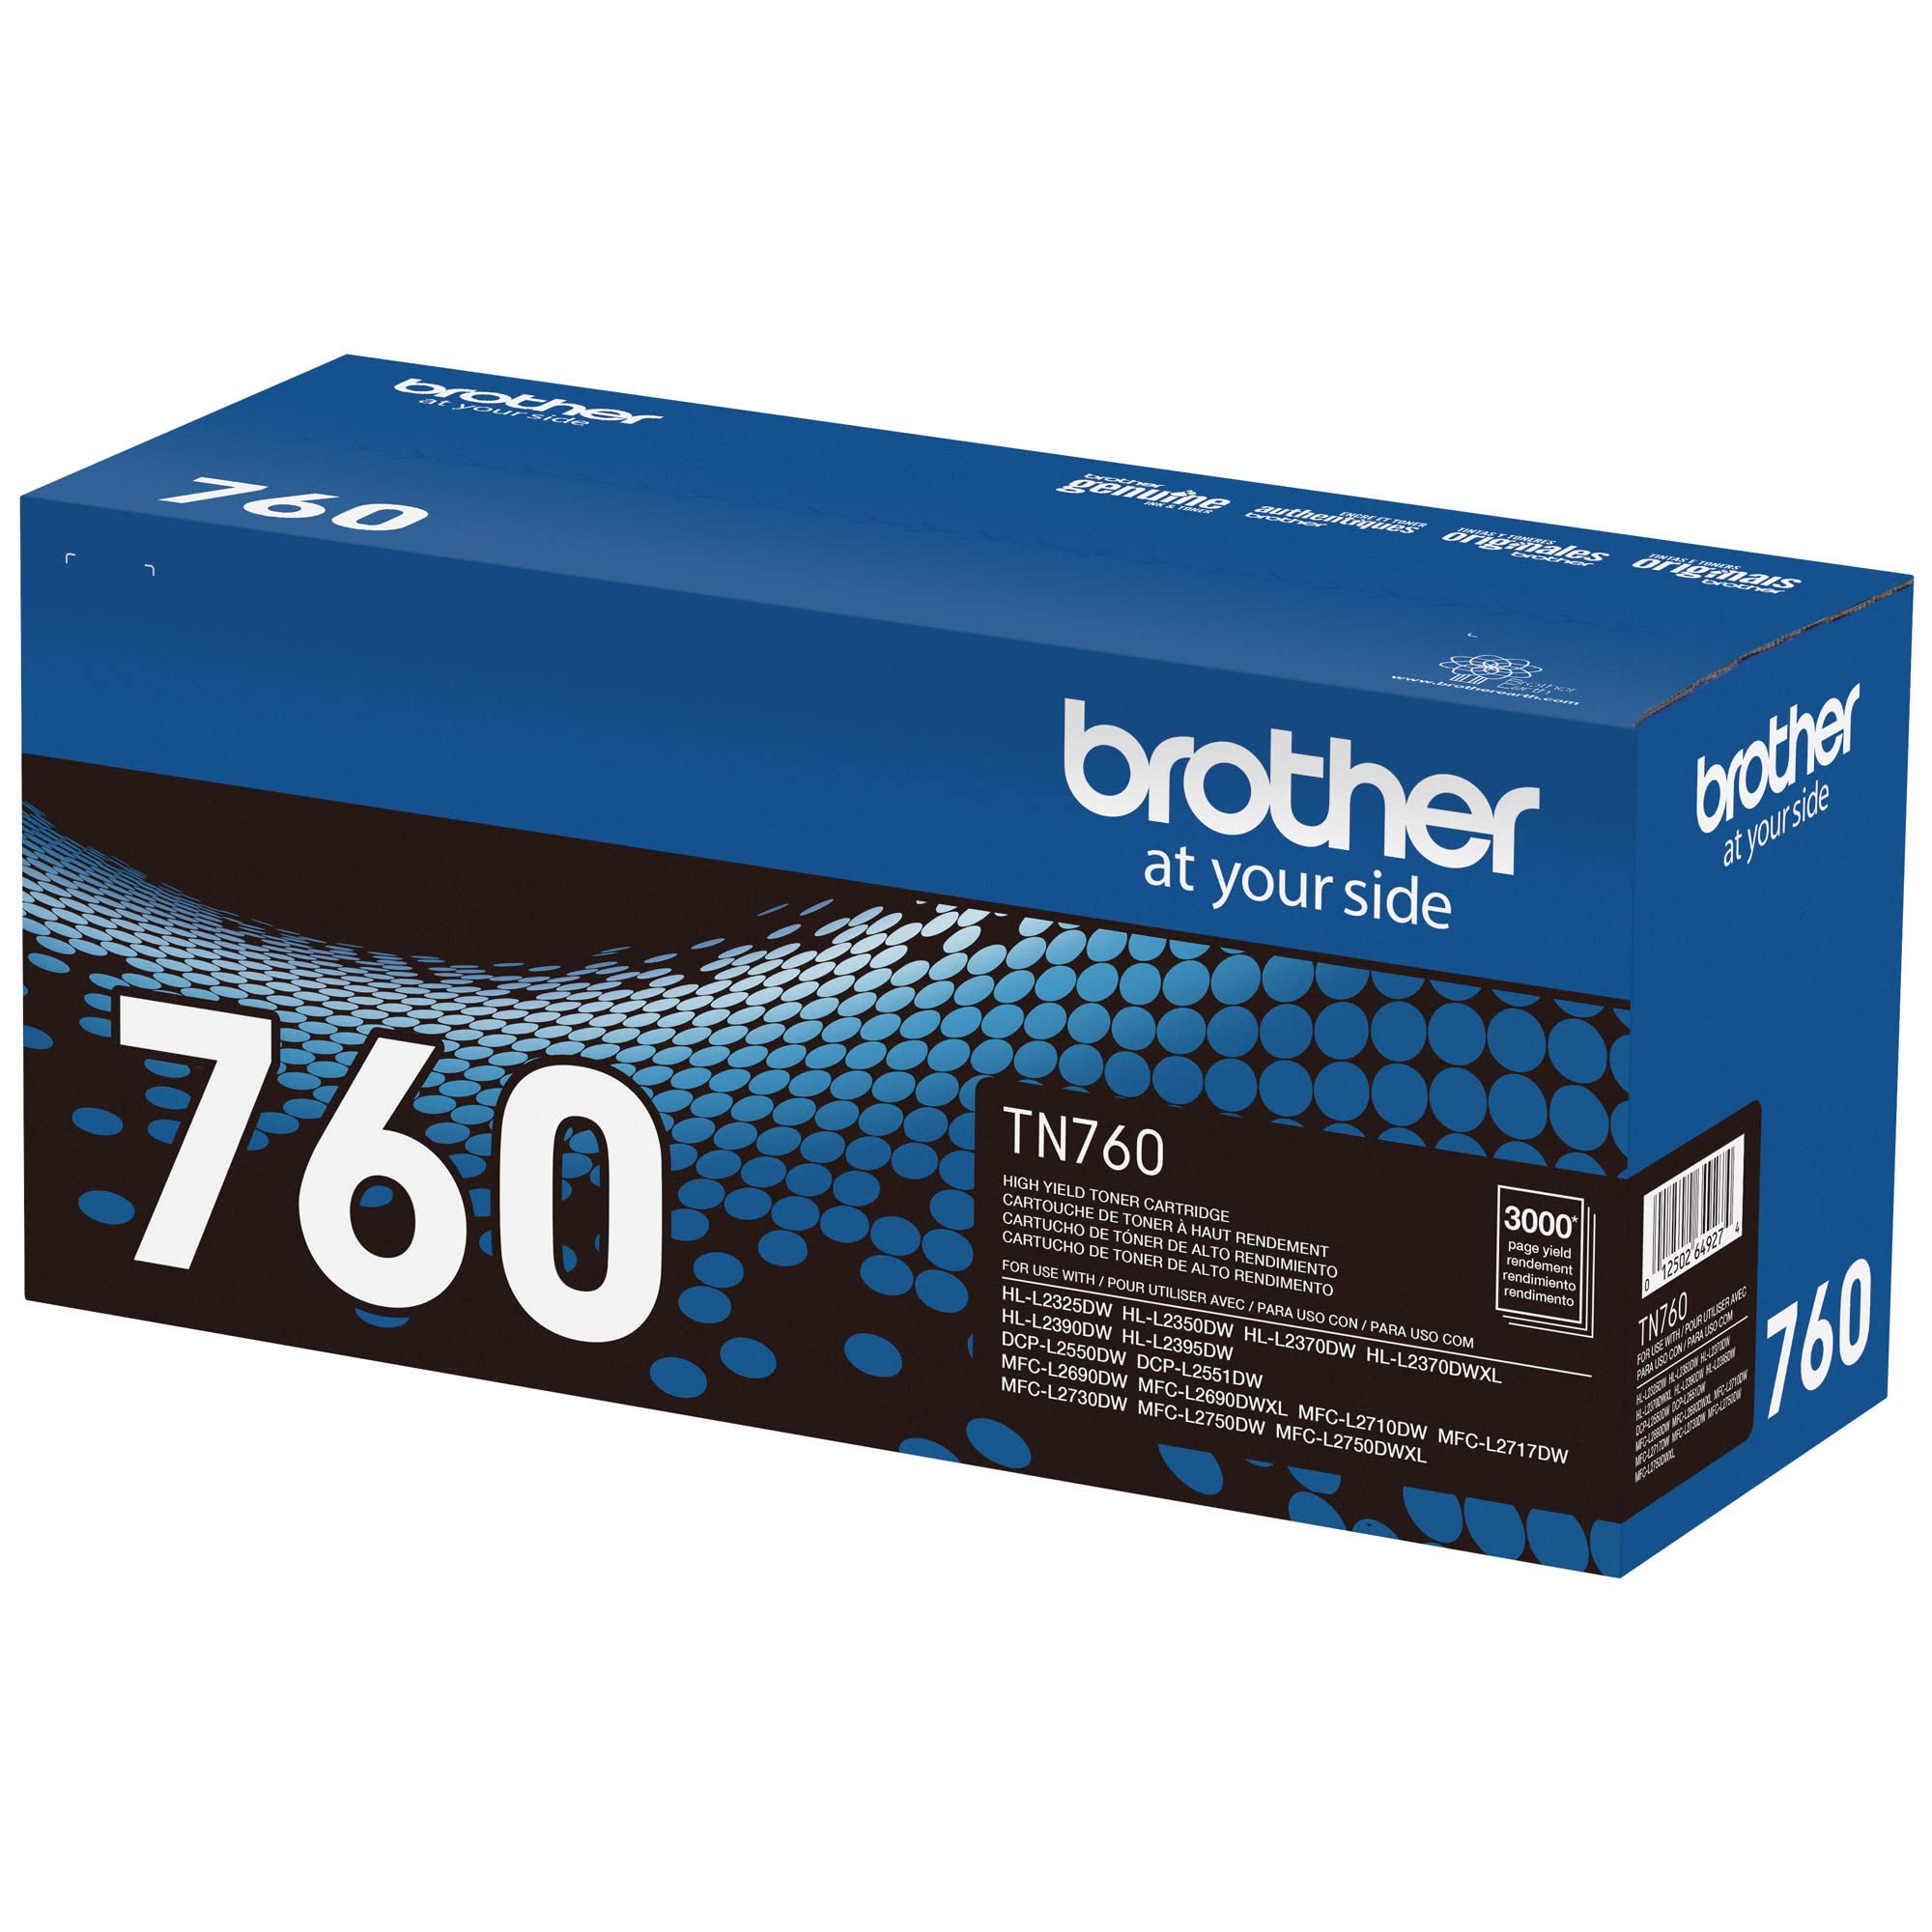 Brother Genuine Cartridge TN760 High Yield Black Toner